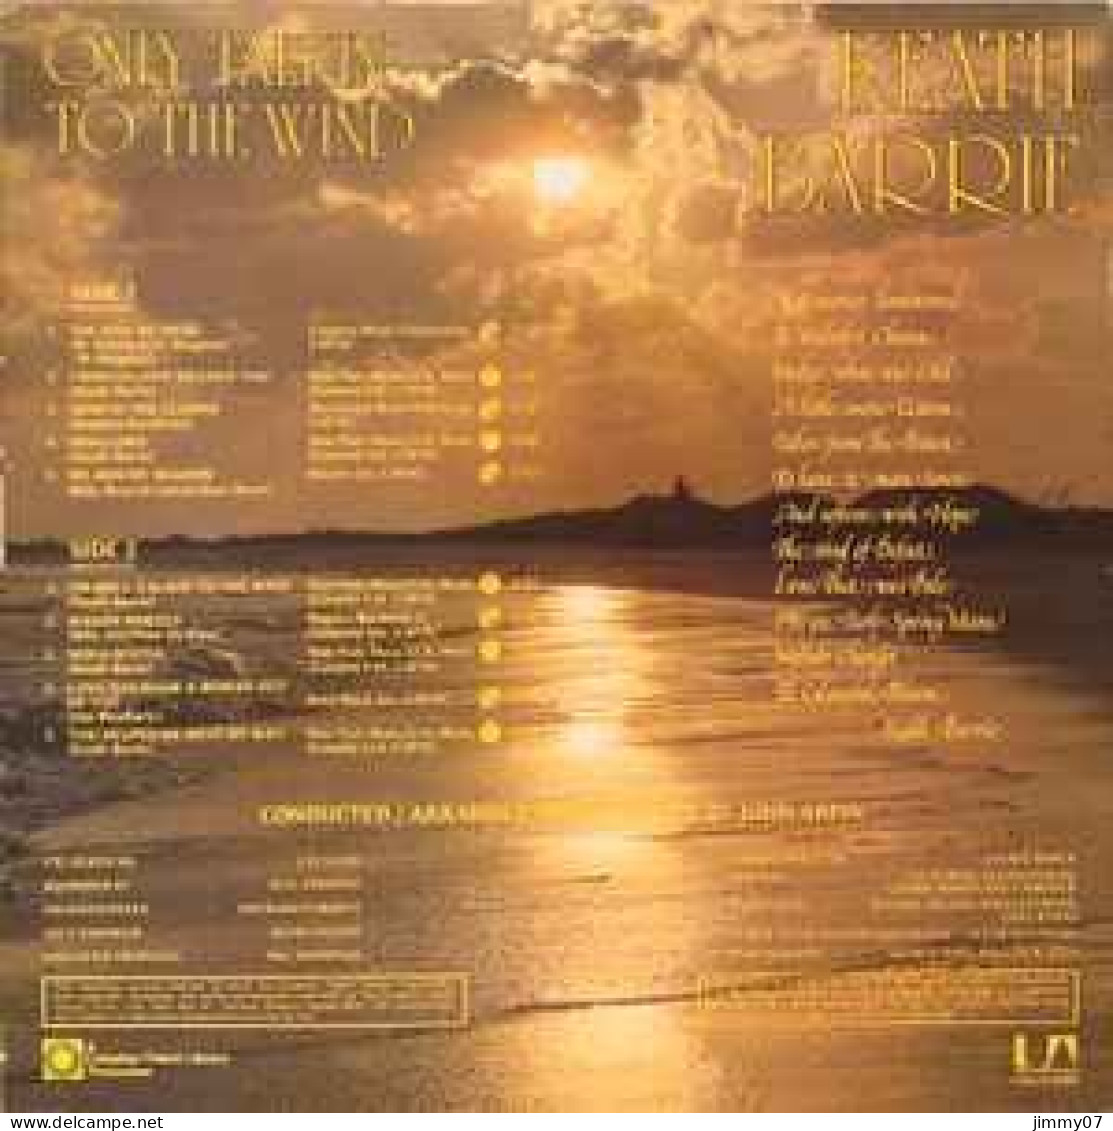 Keath Barrie - Only Talkin' To The Wind (LP, Album) - Disco, Pop